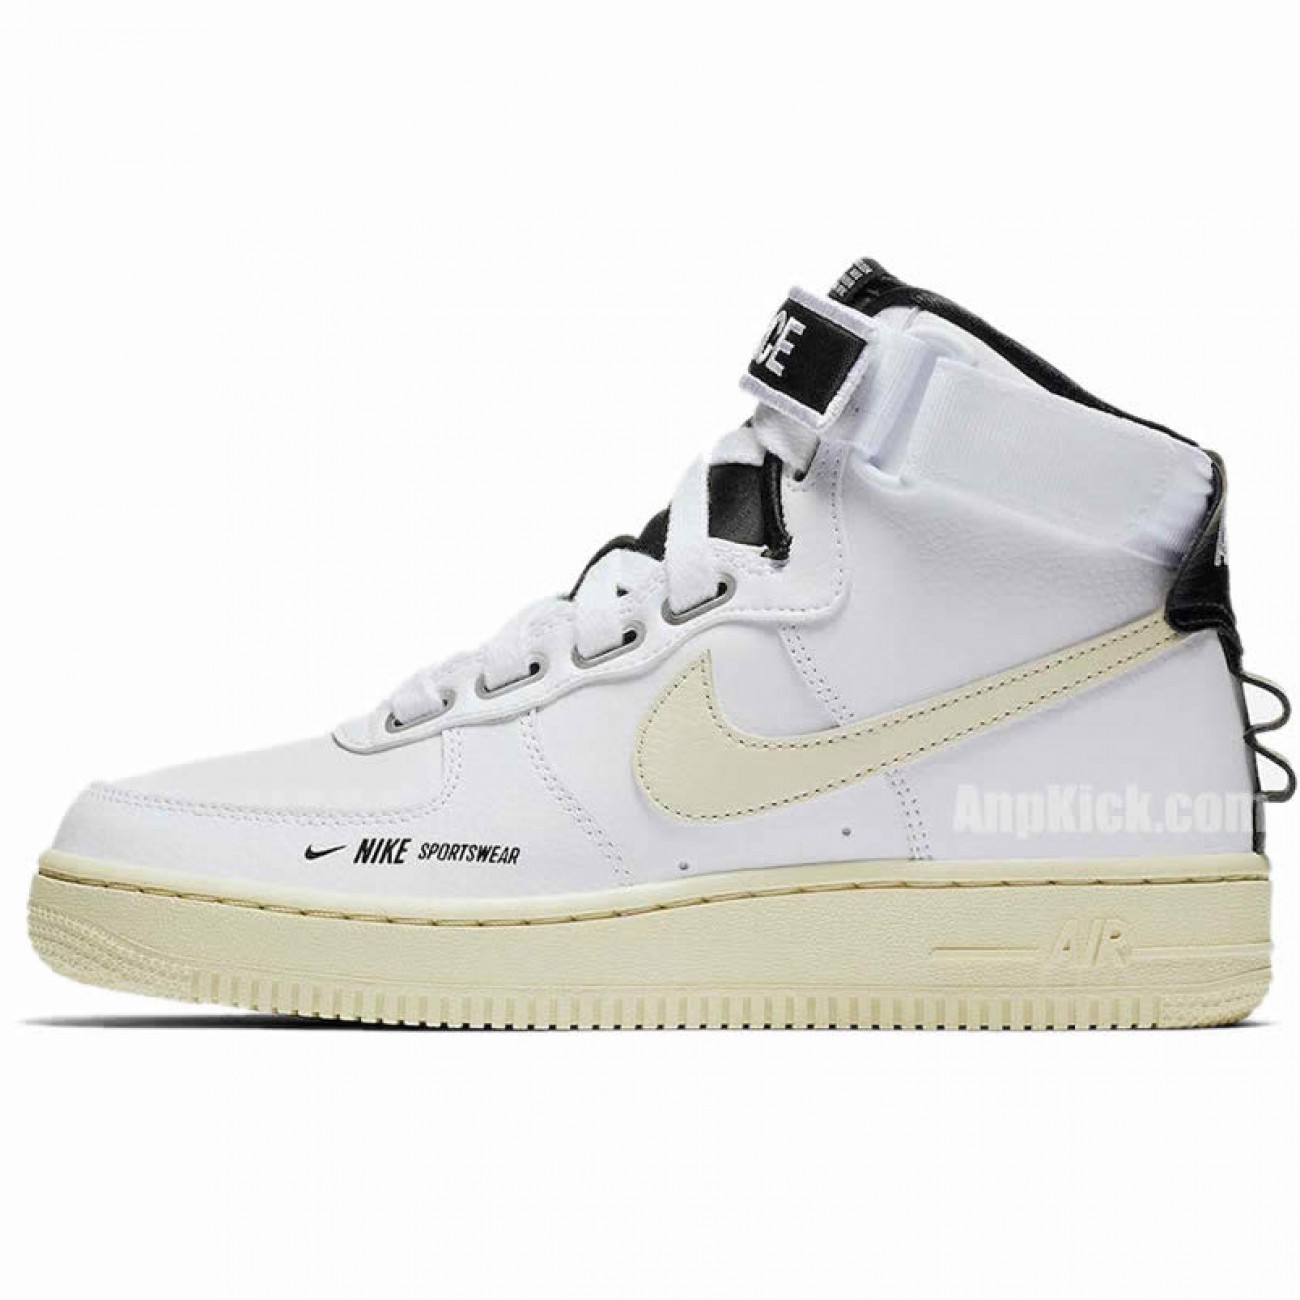 Nike Air Force 1 High Utility White/Black Sportswear AJ7311-100